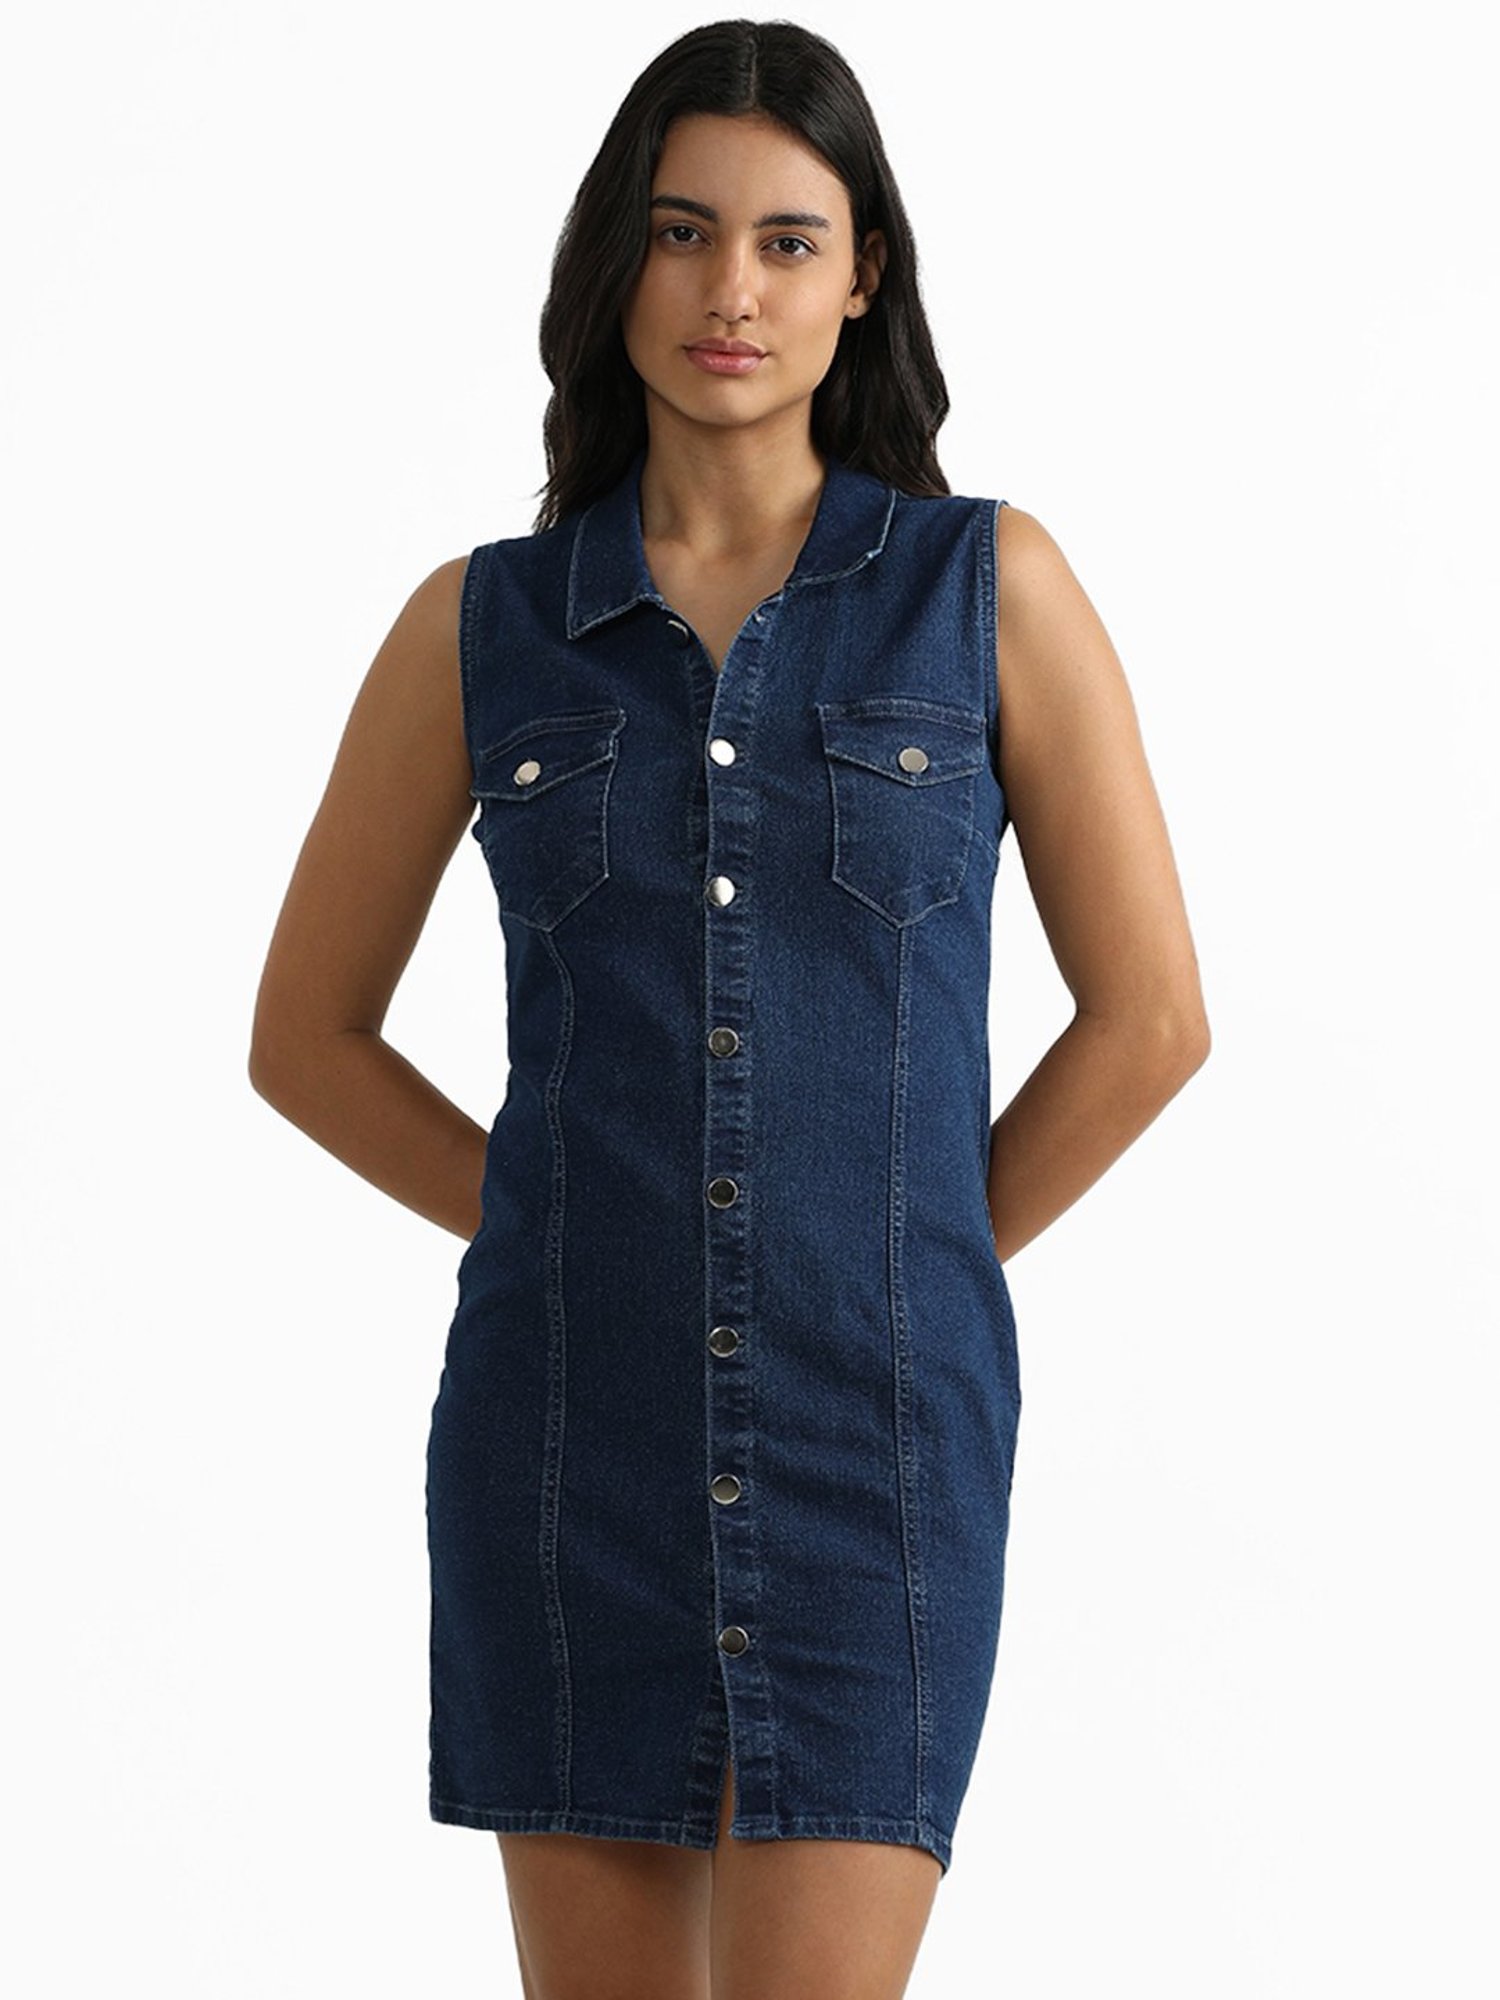 Buy Yidarer Women's Casual Sleeveless Denim Shirt Dresses Button Down Long Jean  Dress with Belt(DarkBlue-XL), Darkblue, X-Large at Amazon.in